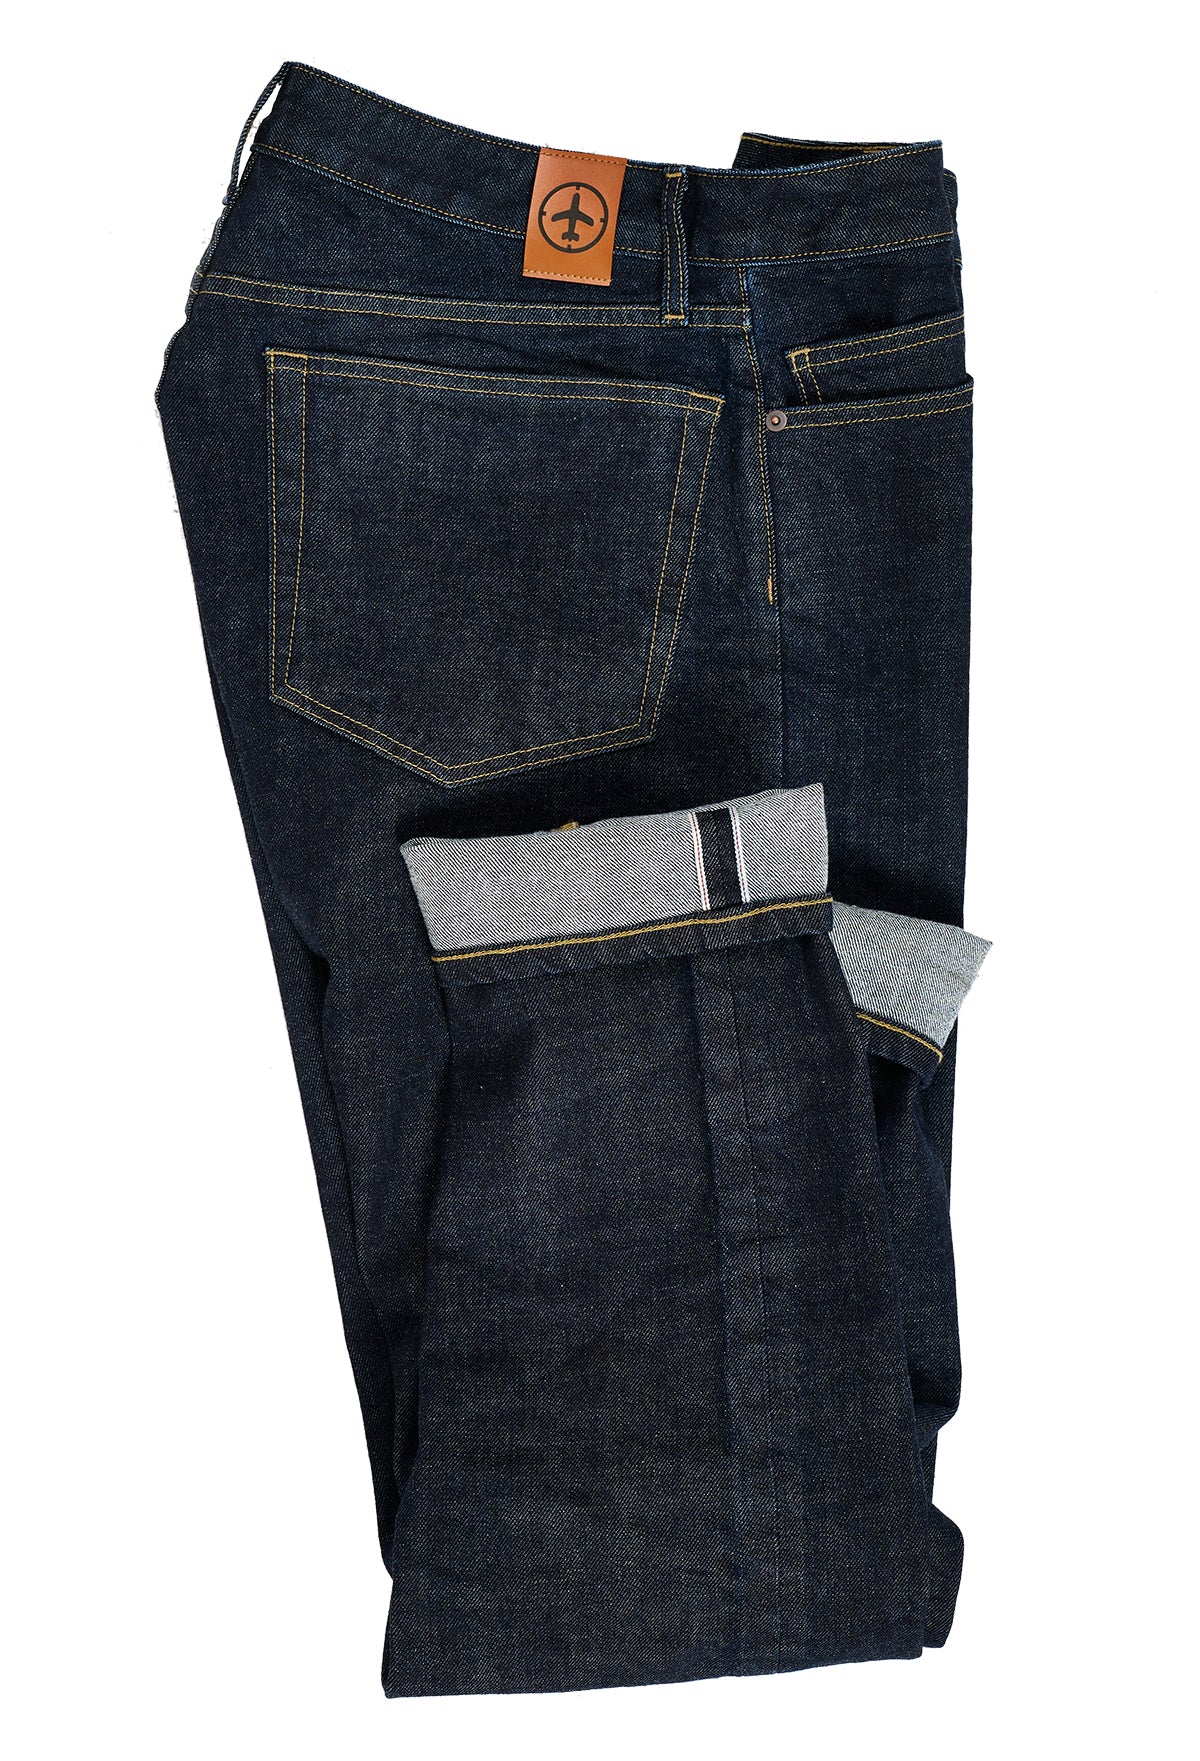 Aviator The Best Travel Jeans for Men | Selvedge Dark Indigo | Made in The USA 38